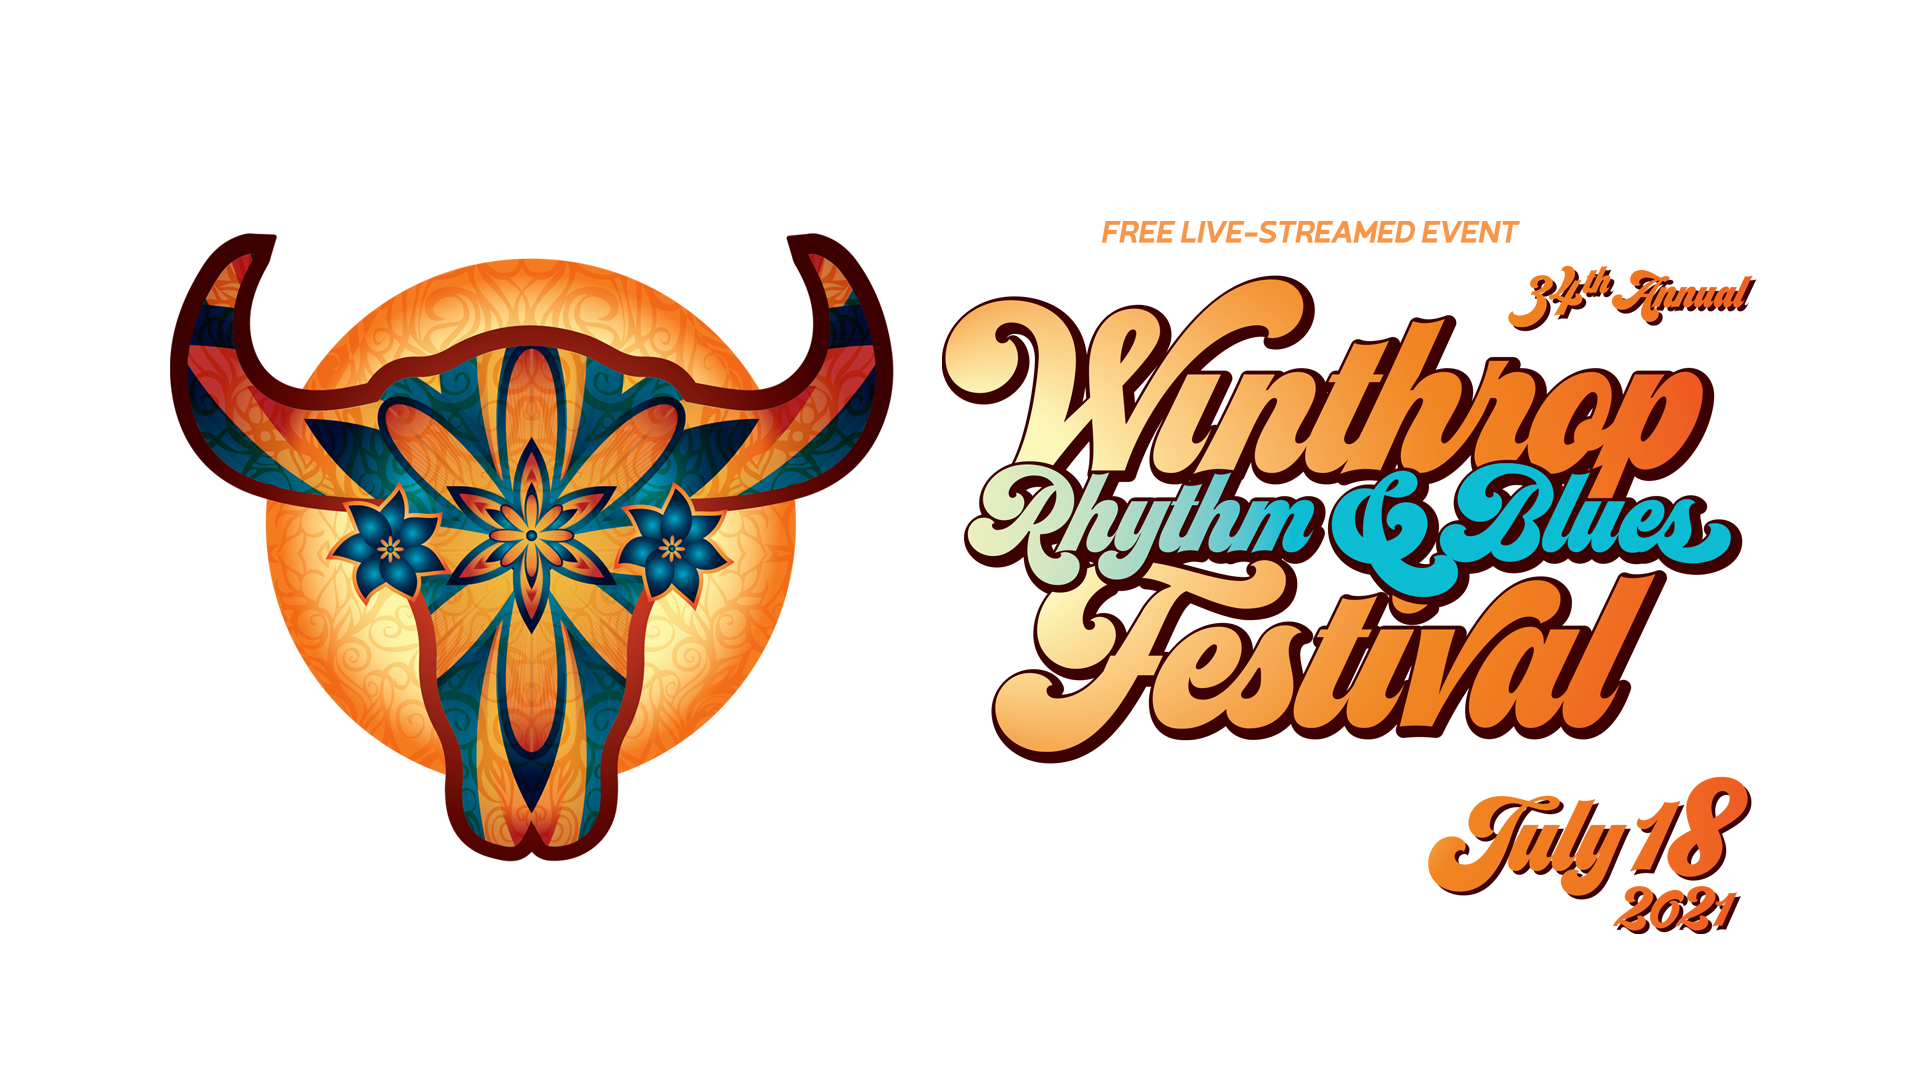 Winthrop Rhythm & Blues Festival The Best Little Festival